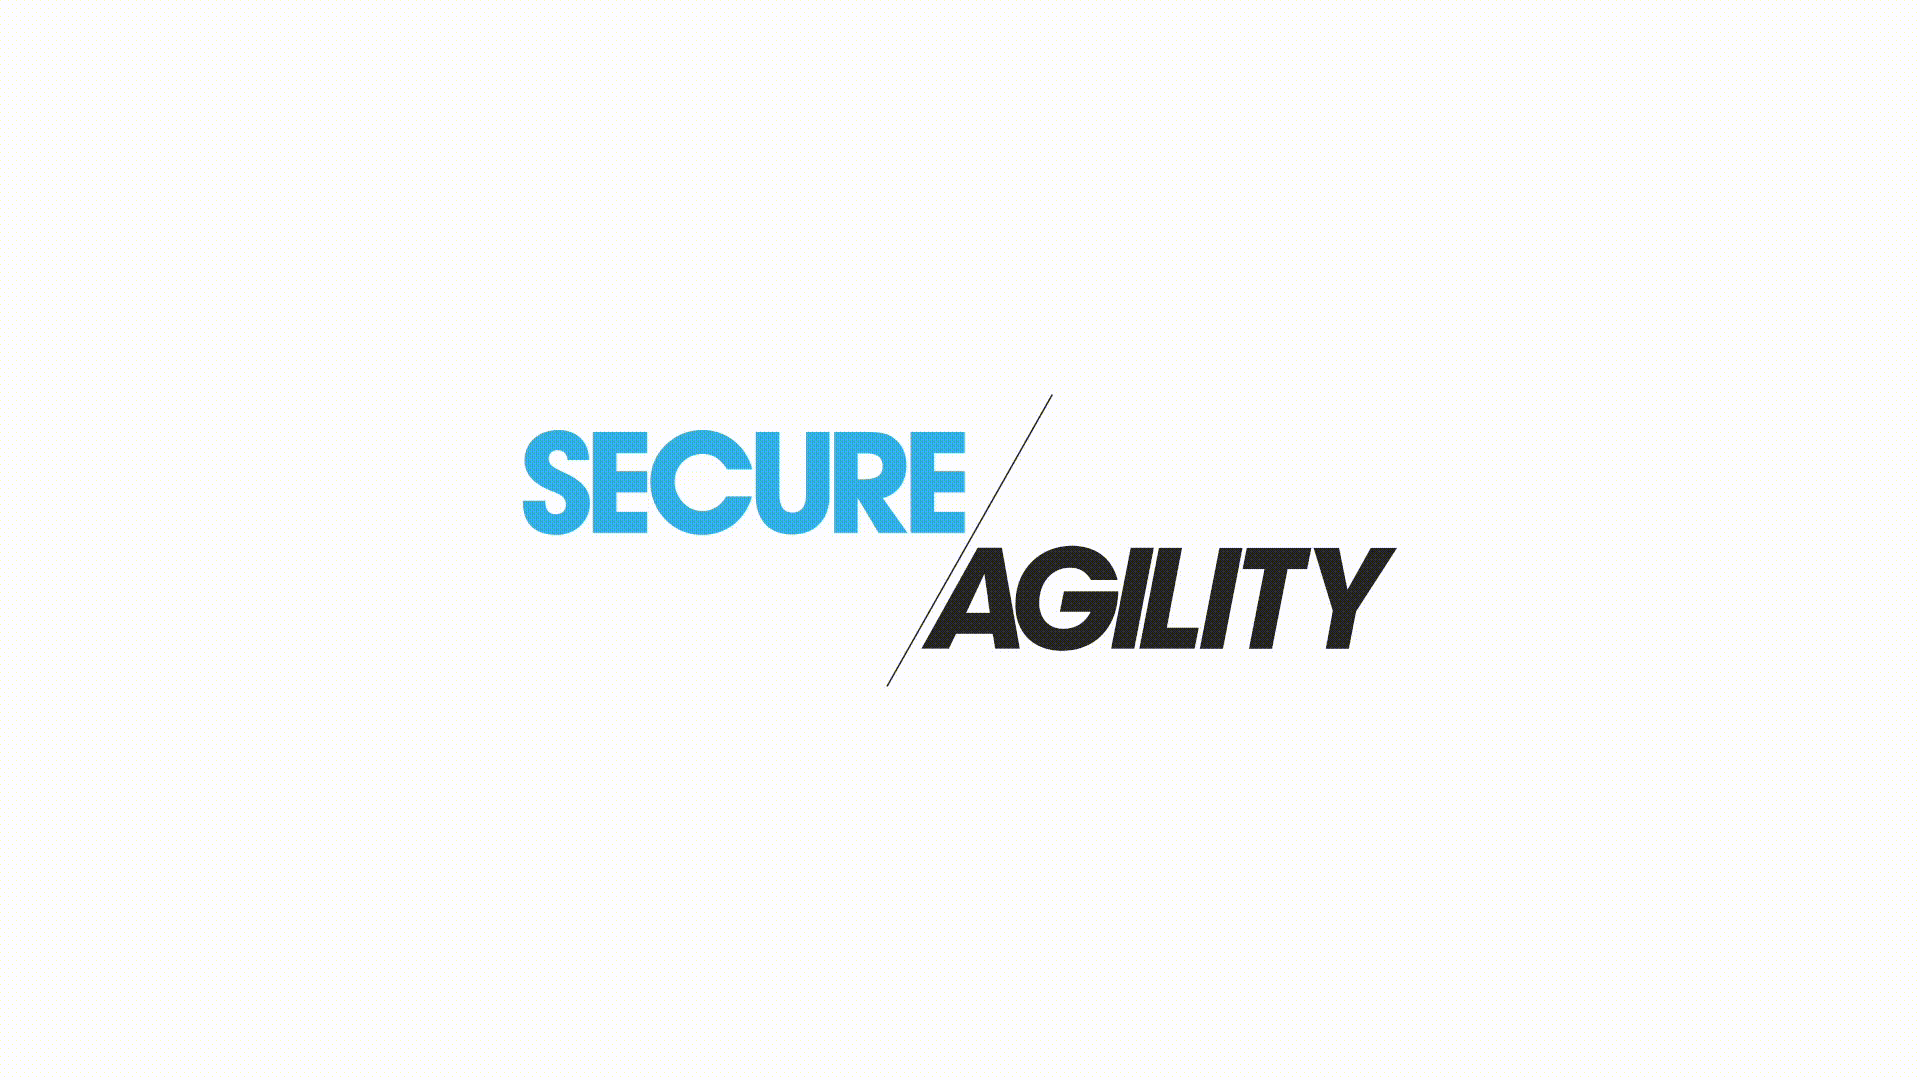 Secure Agility has fresh branding